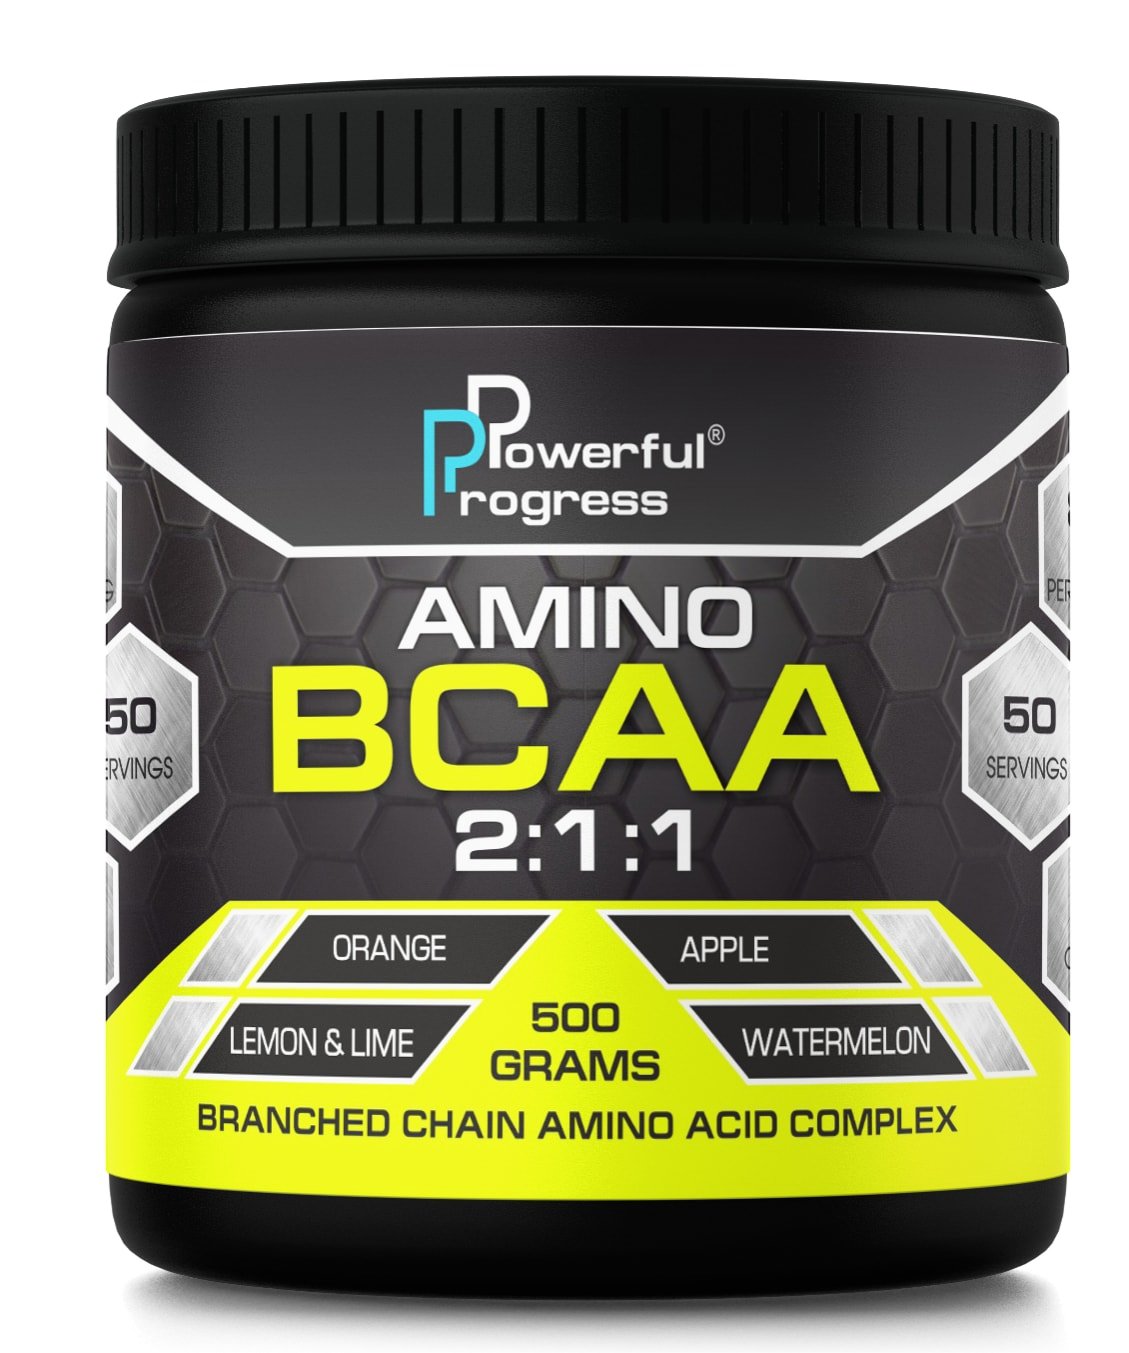 Amino BCAA, 500 g, Powerful Progress. BCAA. Weight Loss recuperación Anti-catabolic properties Lean muscle mass 